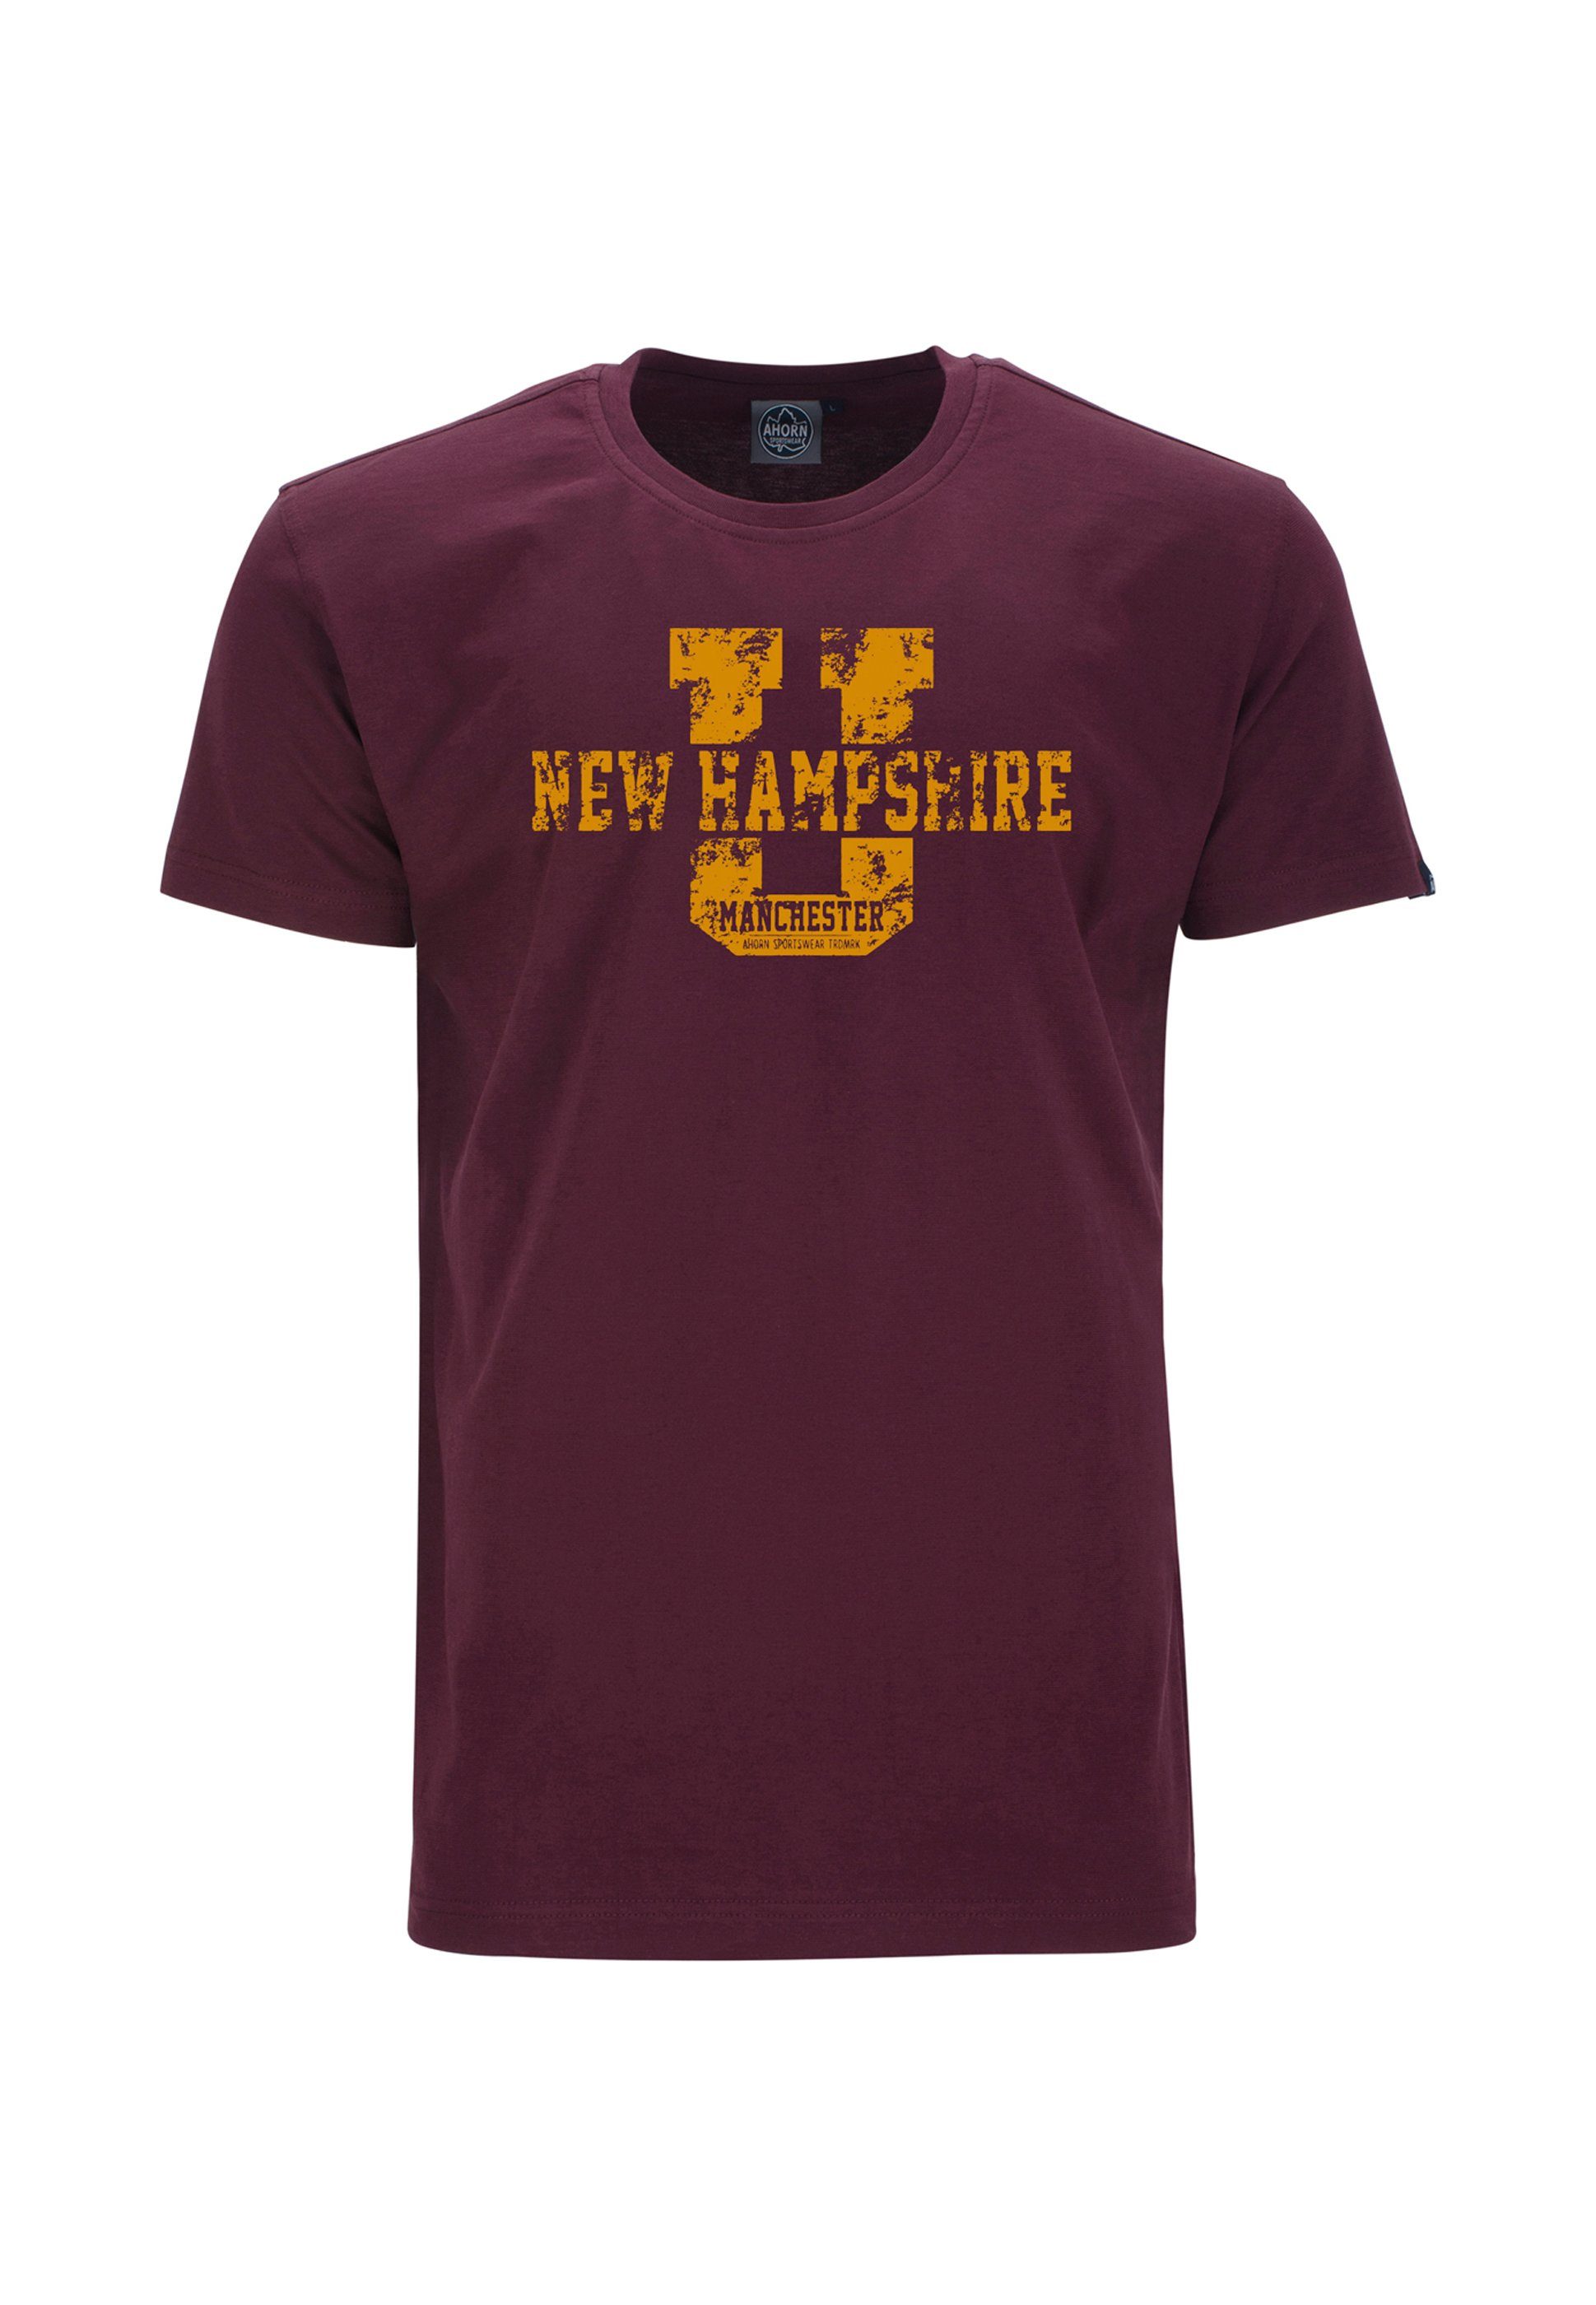 AHORN SPORTSWEAR T-Shirt NEW HAMPSHIRE mit sportlichem Front-Motiv rot